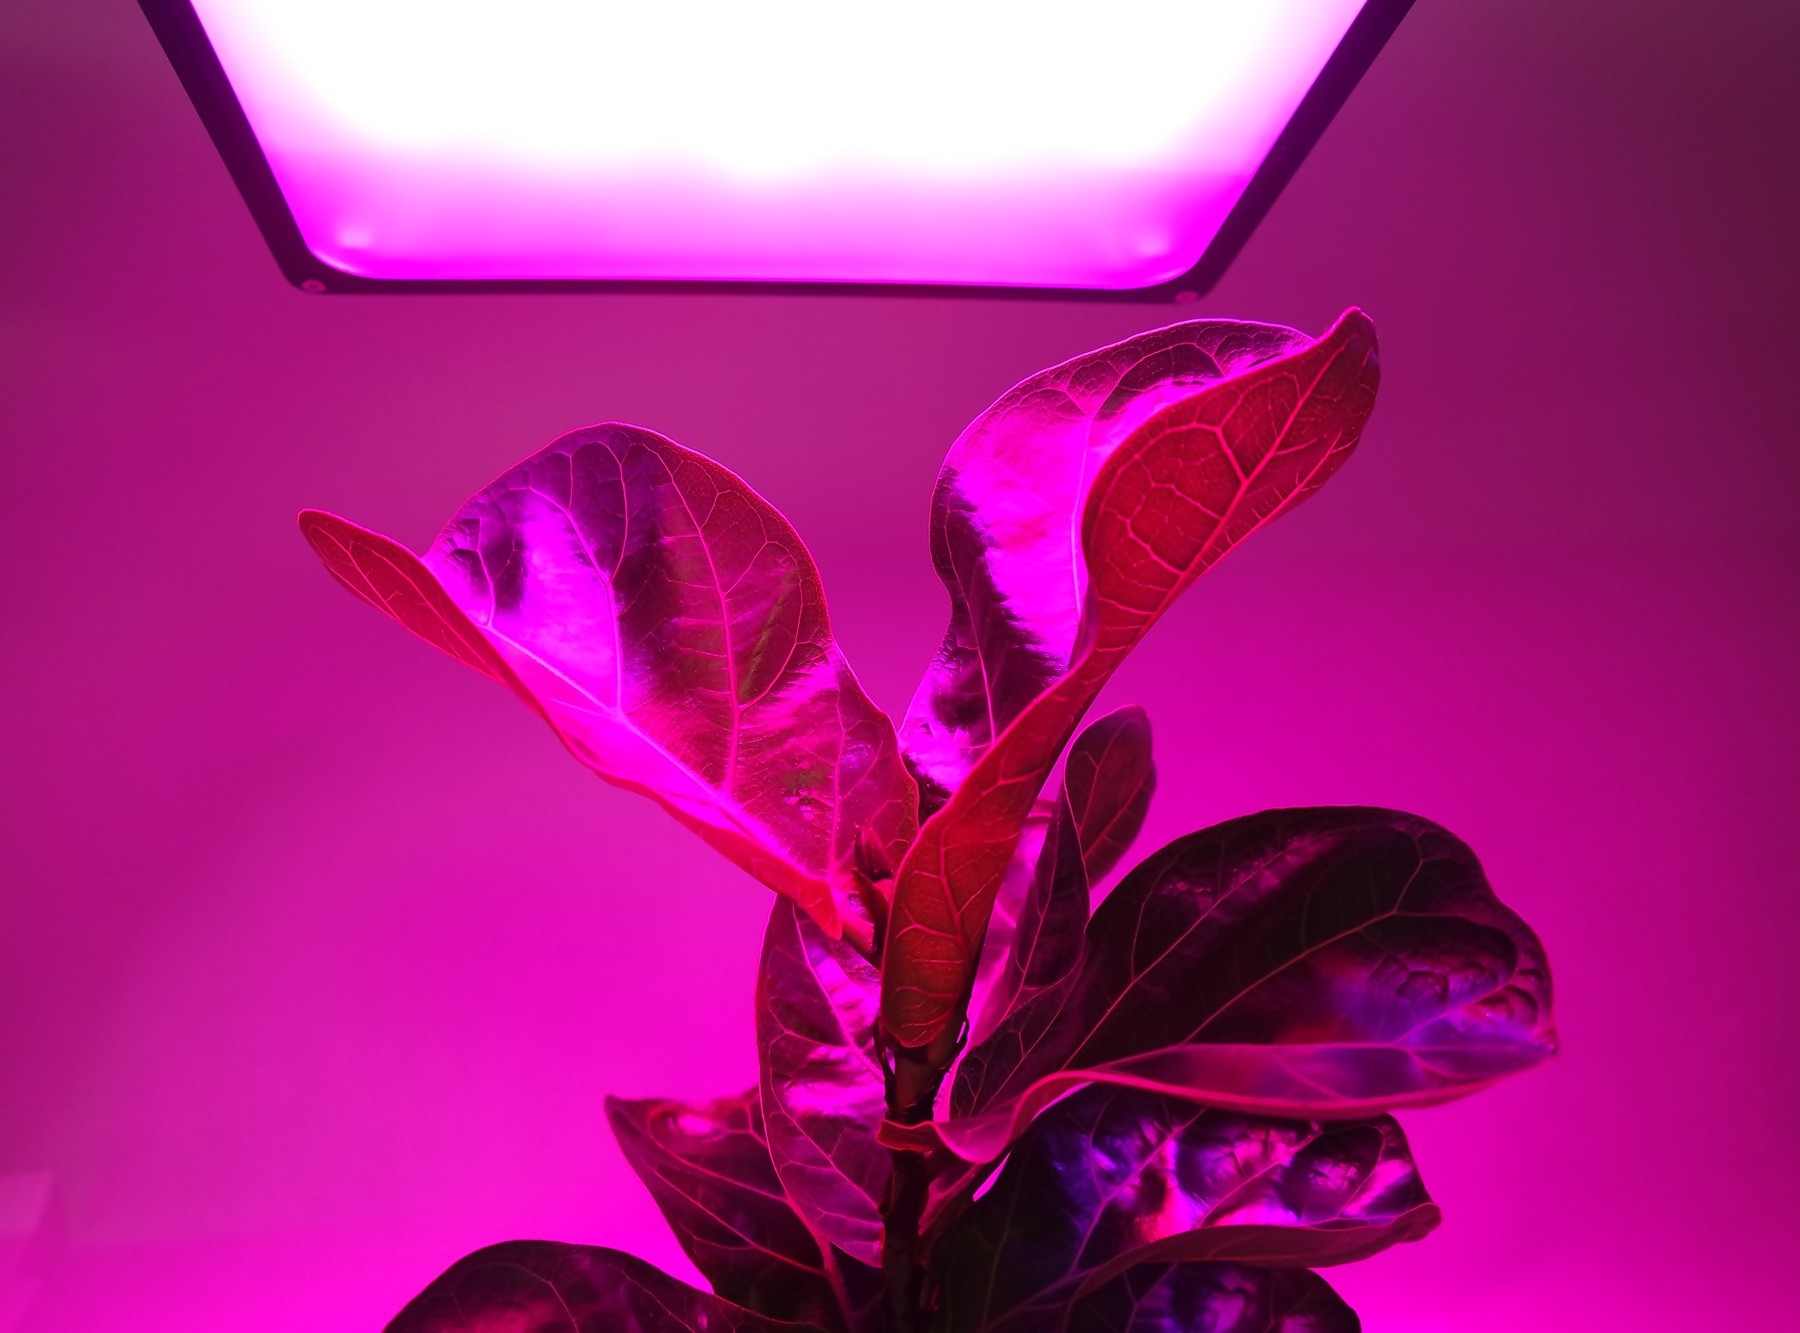 Lampa MEiSSA LED GROW ProFlora 5:1 660/630/450 nm UV 534W 534LED